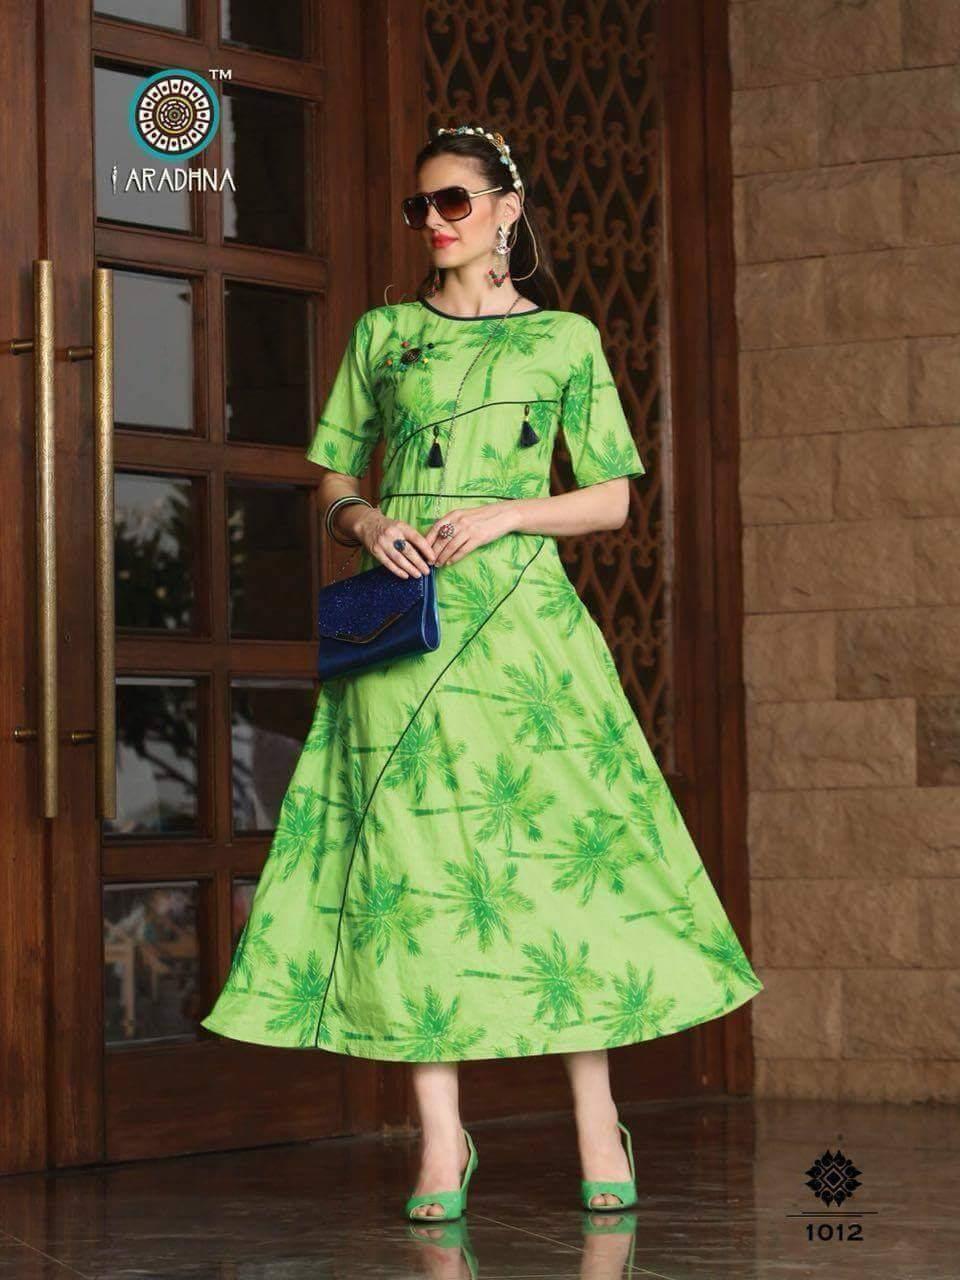 Neon Green Rayon Dress - Shopindiapparels.com